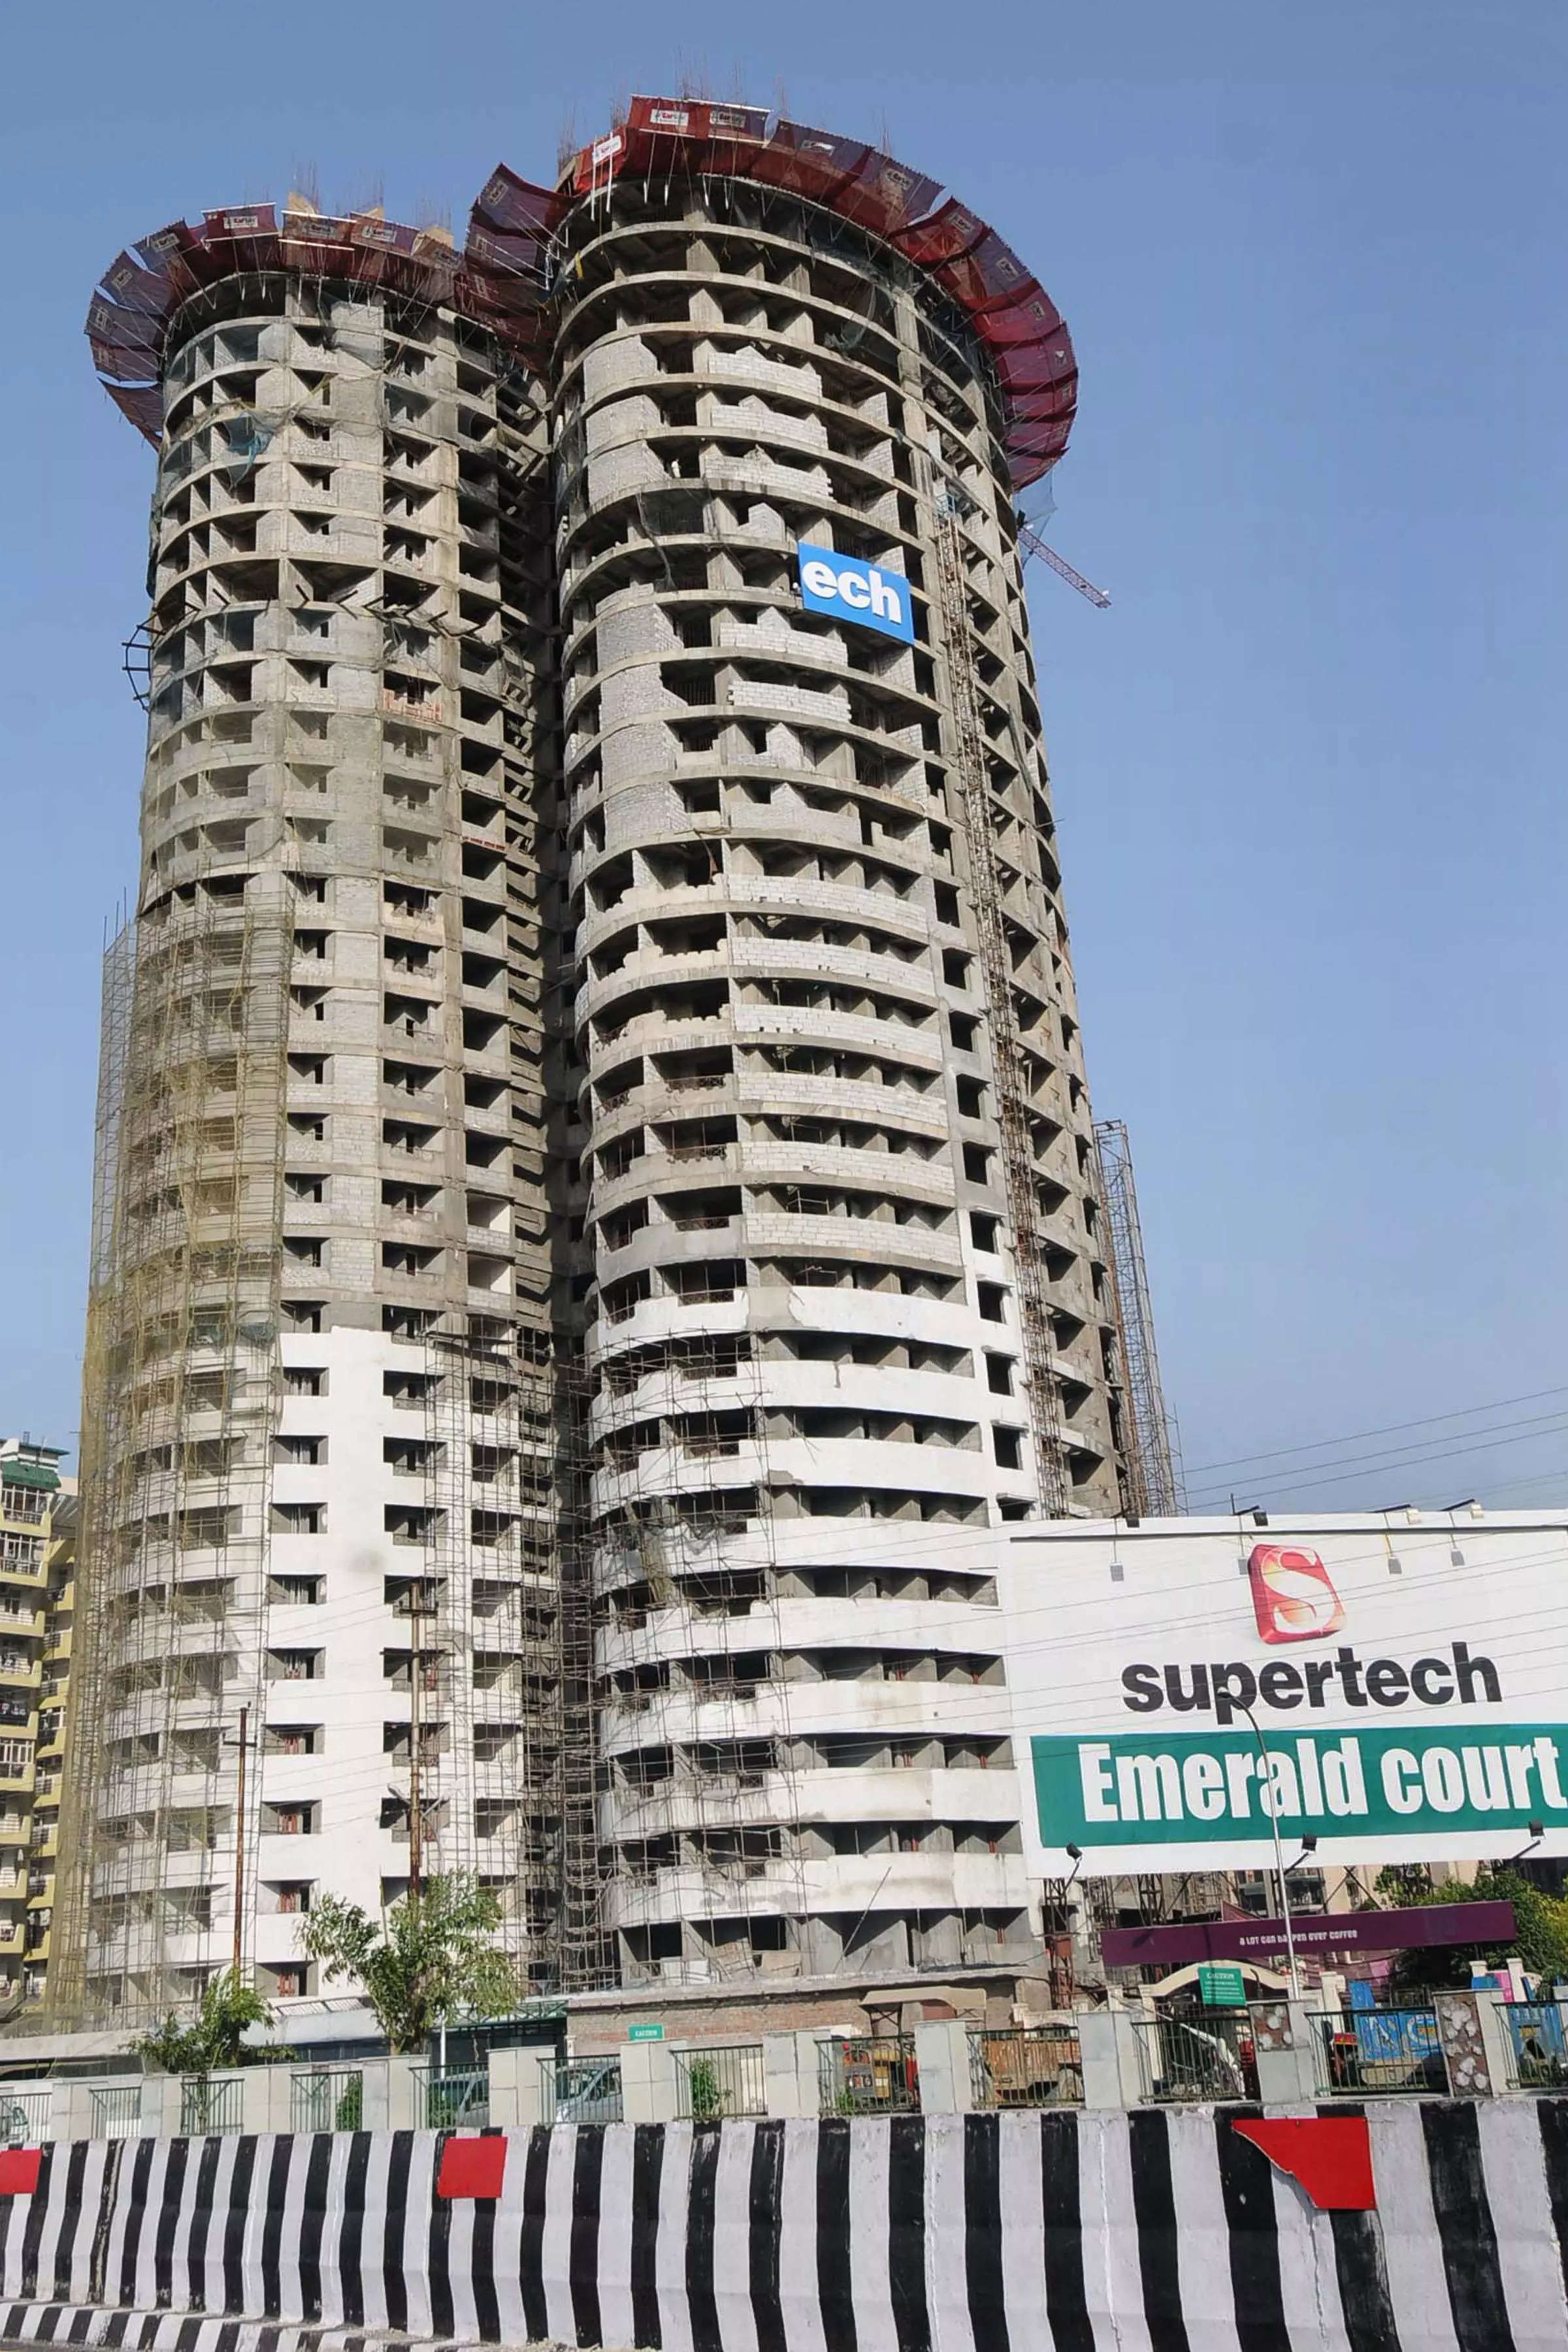 Supertech twin tower demolition